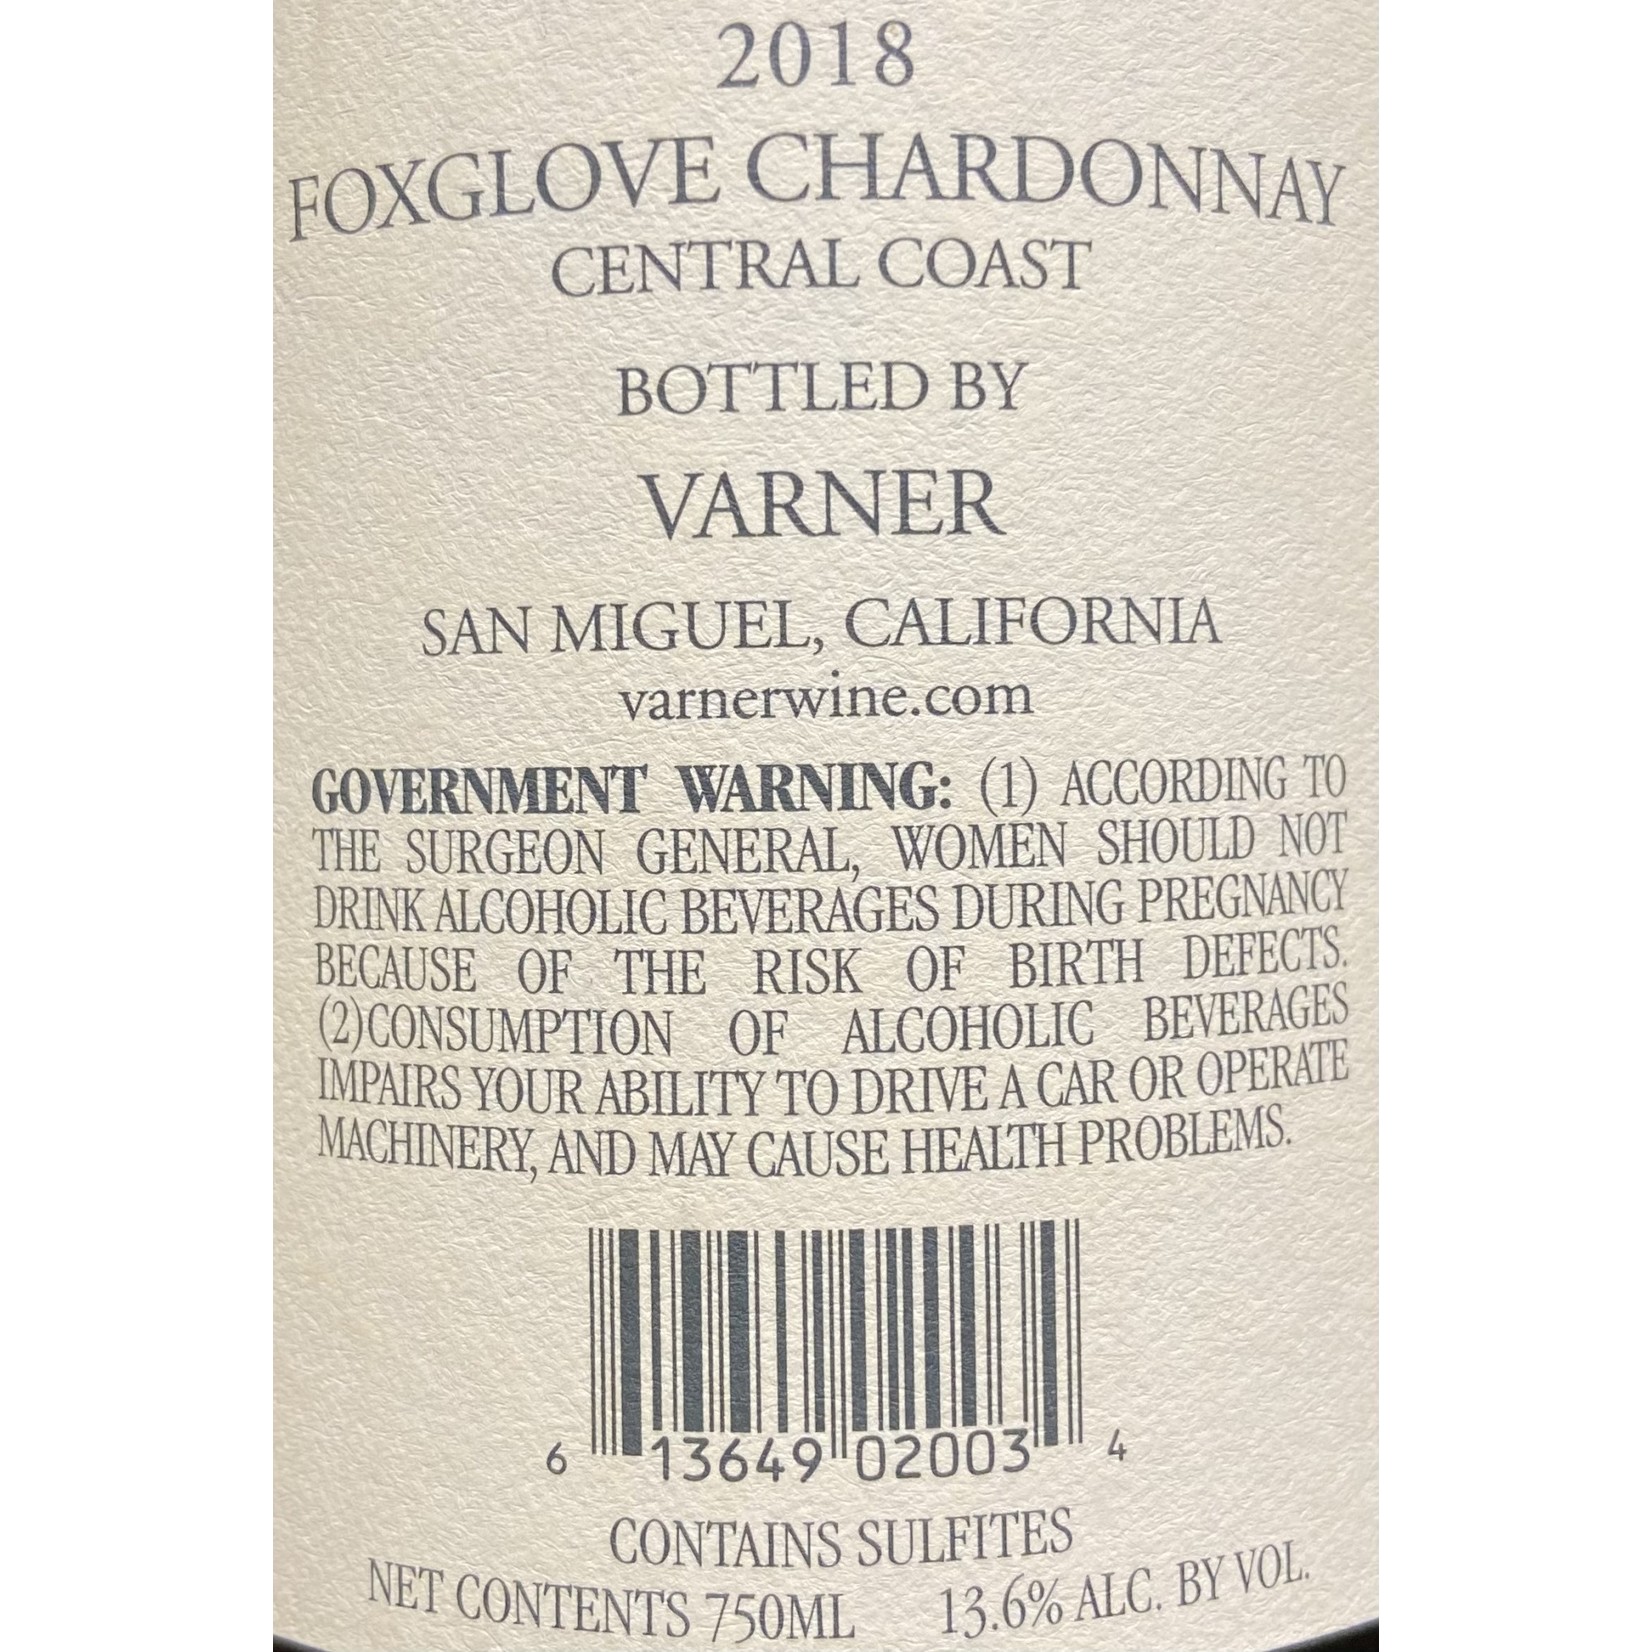 Foxglove Chardonnay, Central Coast, California 2018